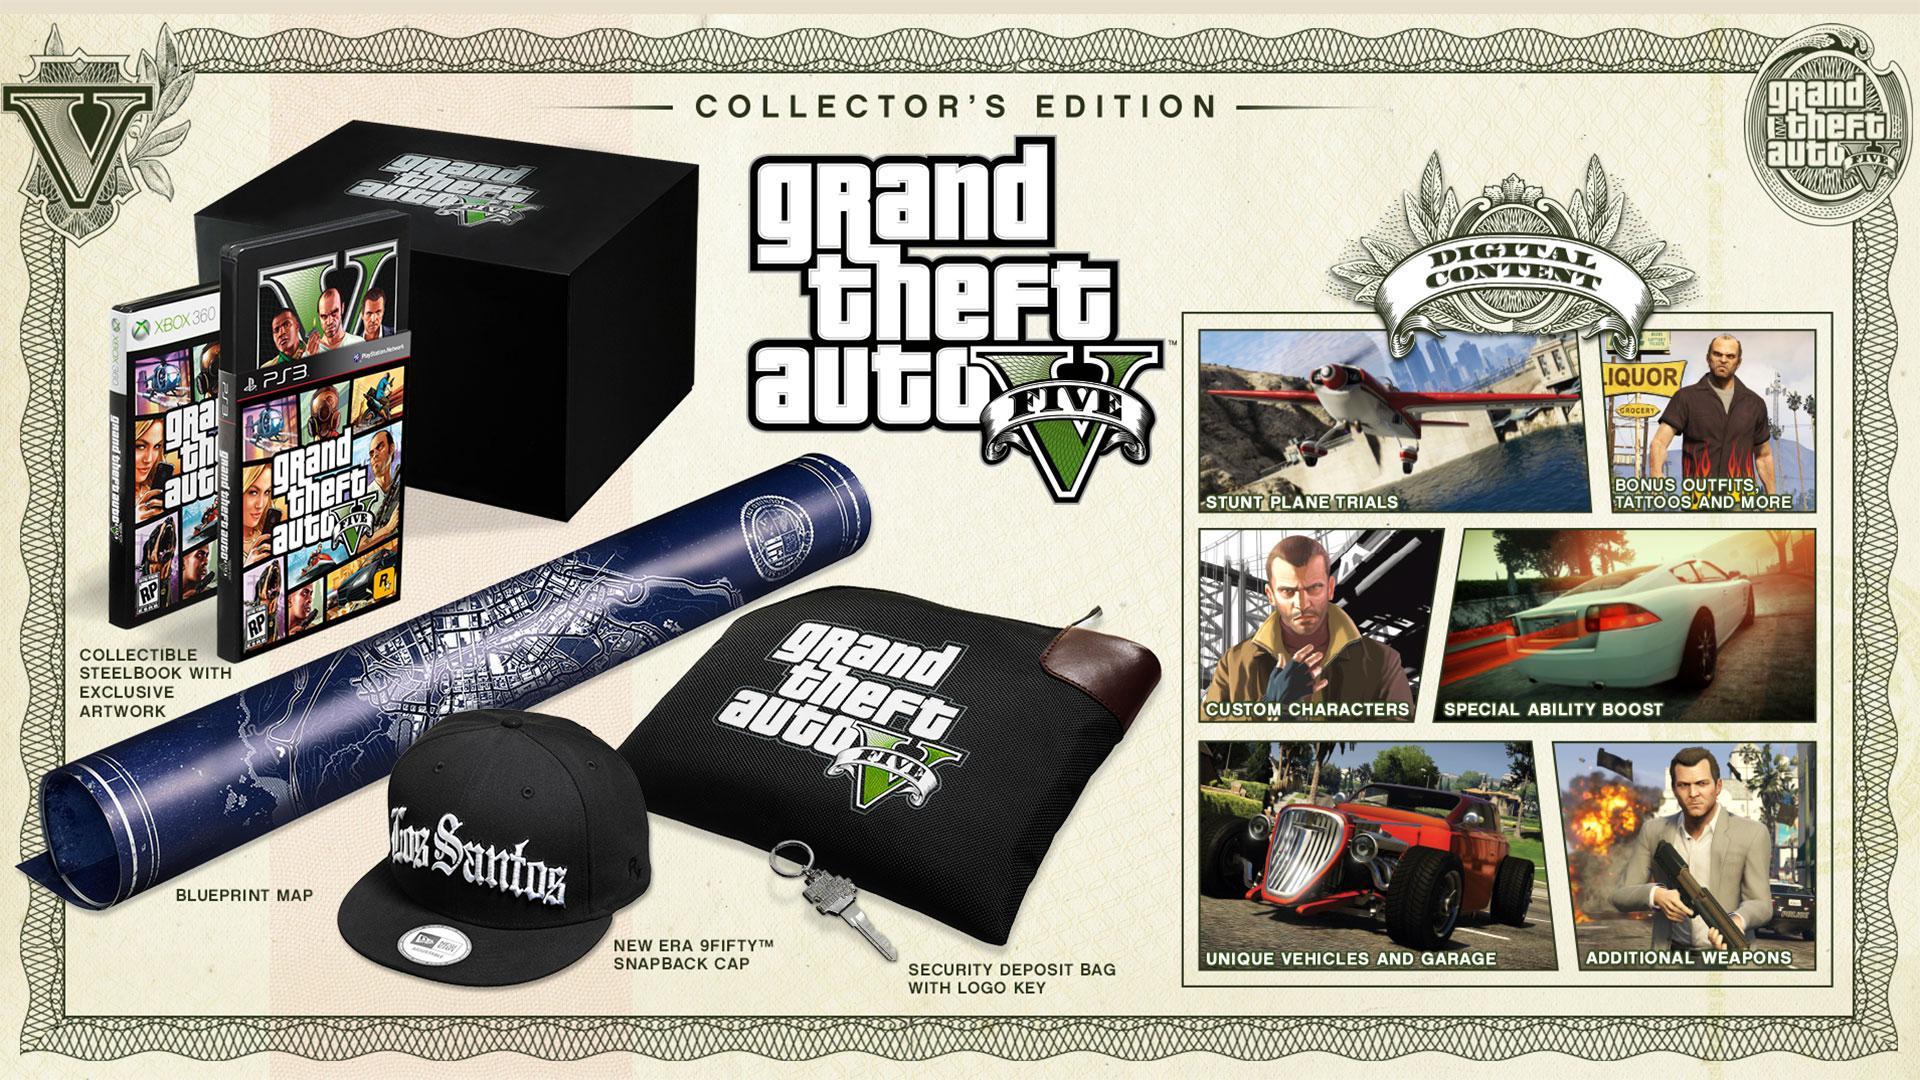 Gta collection. Коллекционное издание ps3 Grand Theft auto 5. Коллекционка GTA 5. Коллекционное издание GTA V Xbox 360. GTA 5 коллекционное издание ps3.